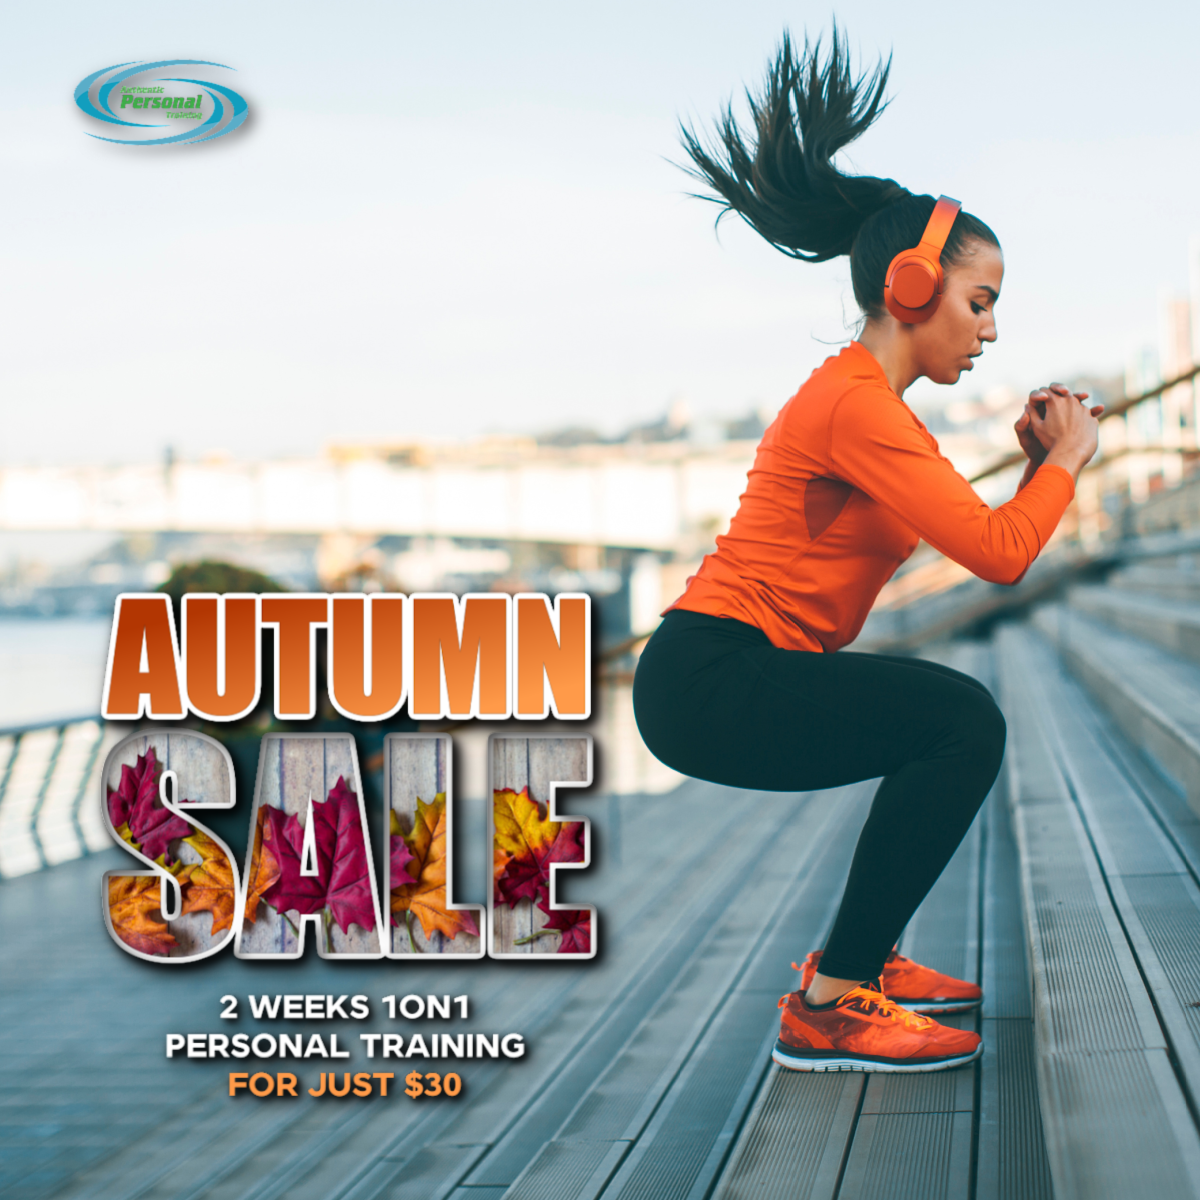 Autumn personal training sale